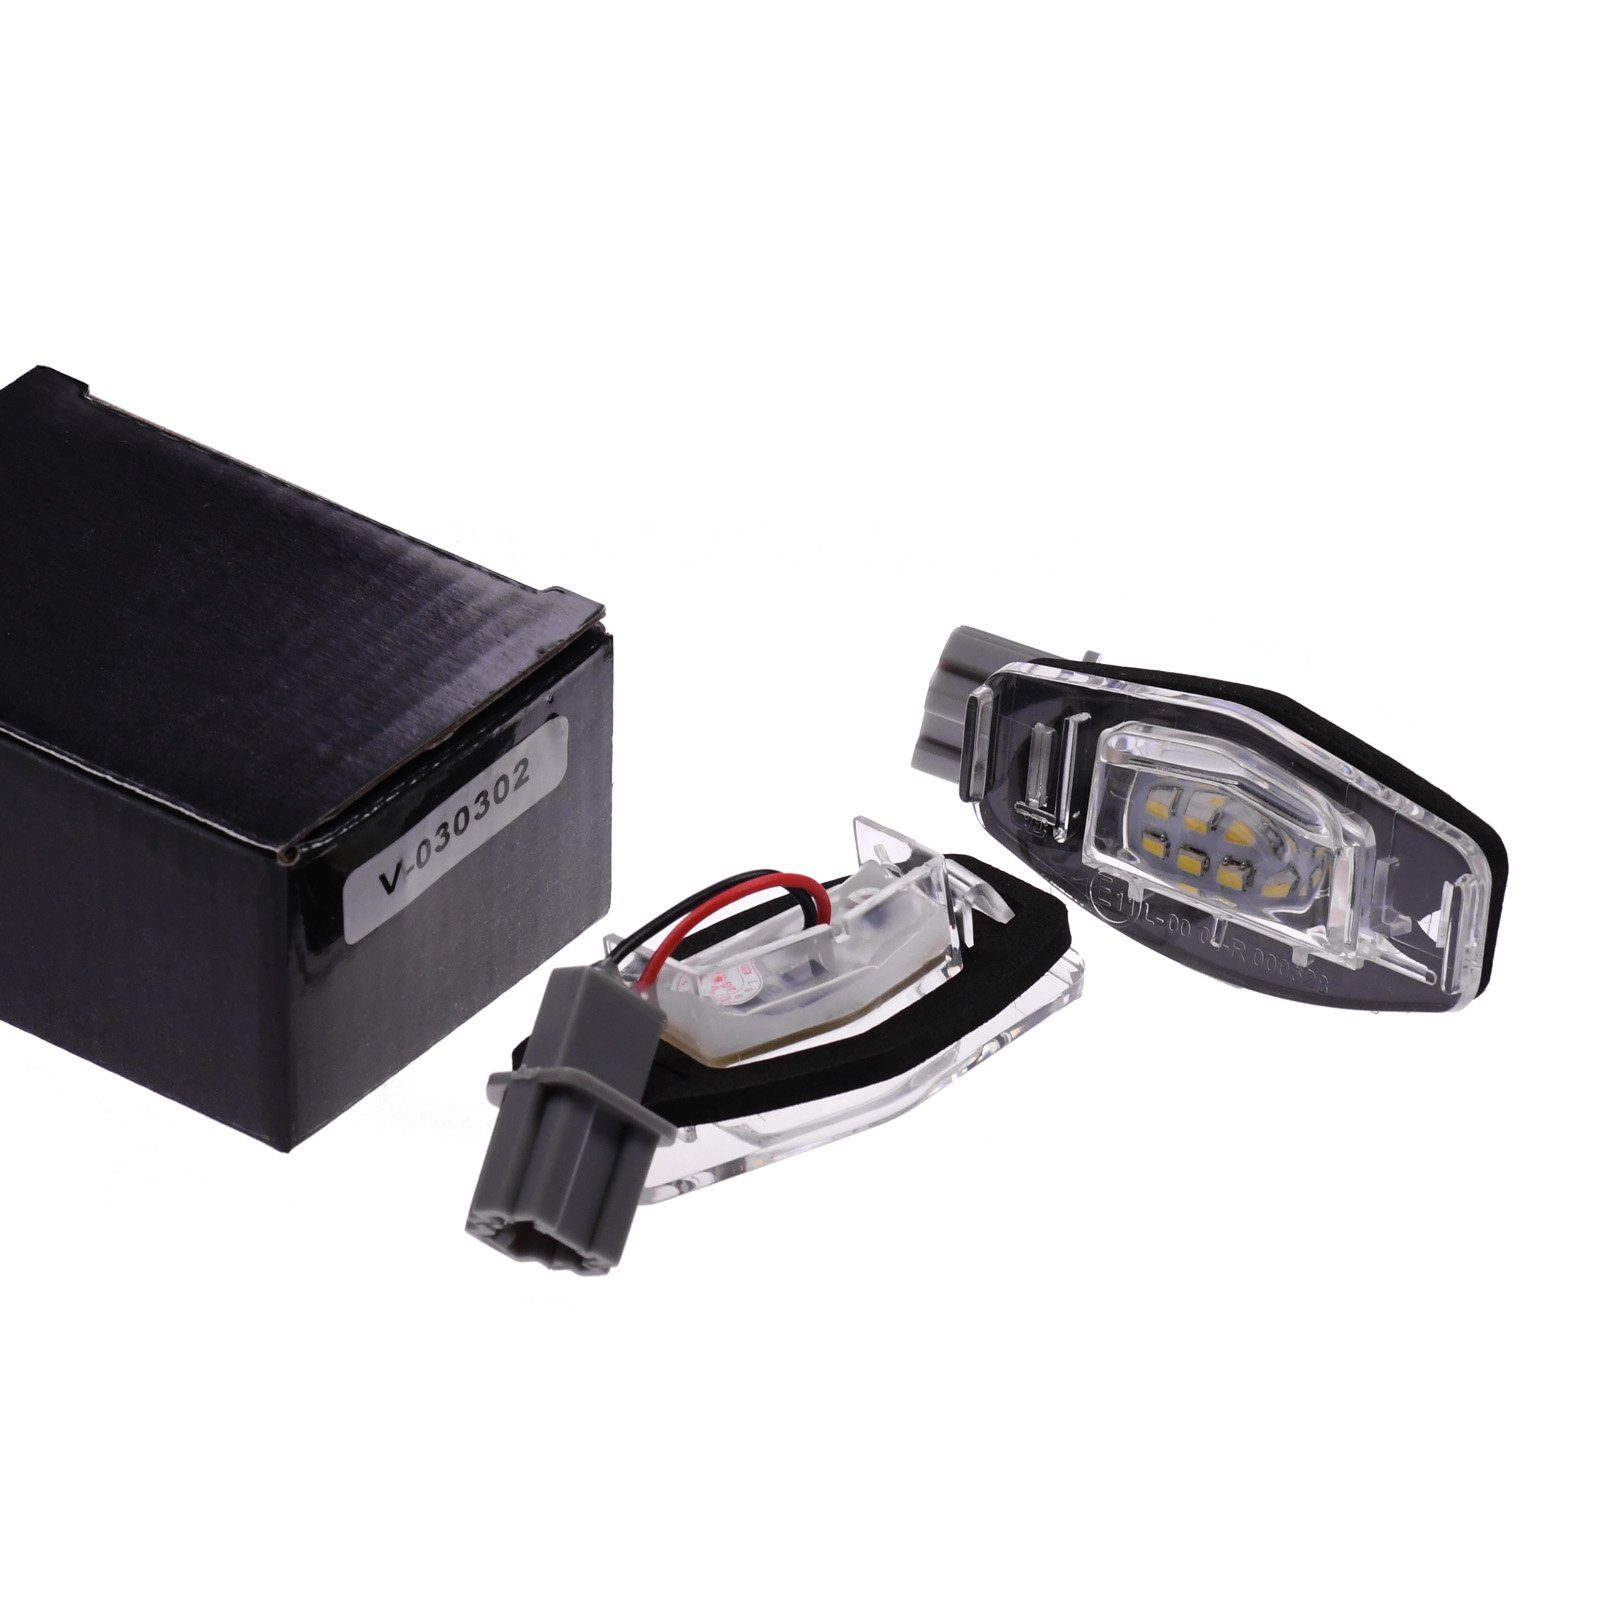 HONDA kompatibel Civic Accord Vinstar HONDA, HR-V mit: für 01-11 KFZ-Ersatzleuchte Legend Kennzeichenbeleuchtung LED E-geprüft FR-V